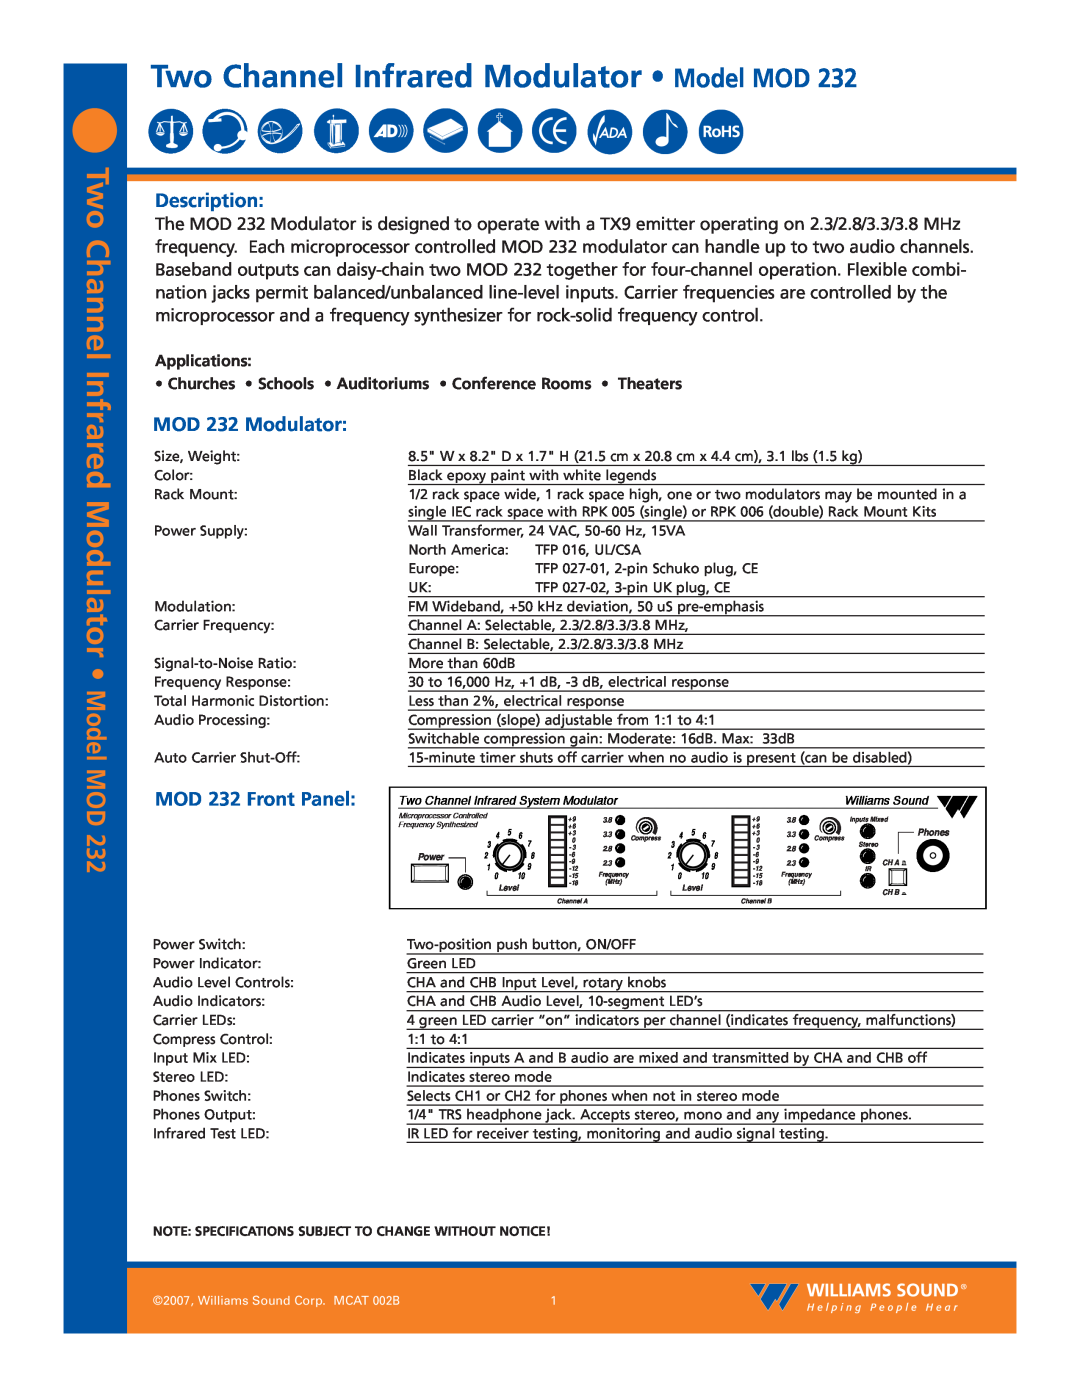 Williams Sound specifications Two Channel Infrared Modulator Model MOD, Description, MOD 232 Modulator 